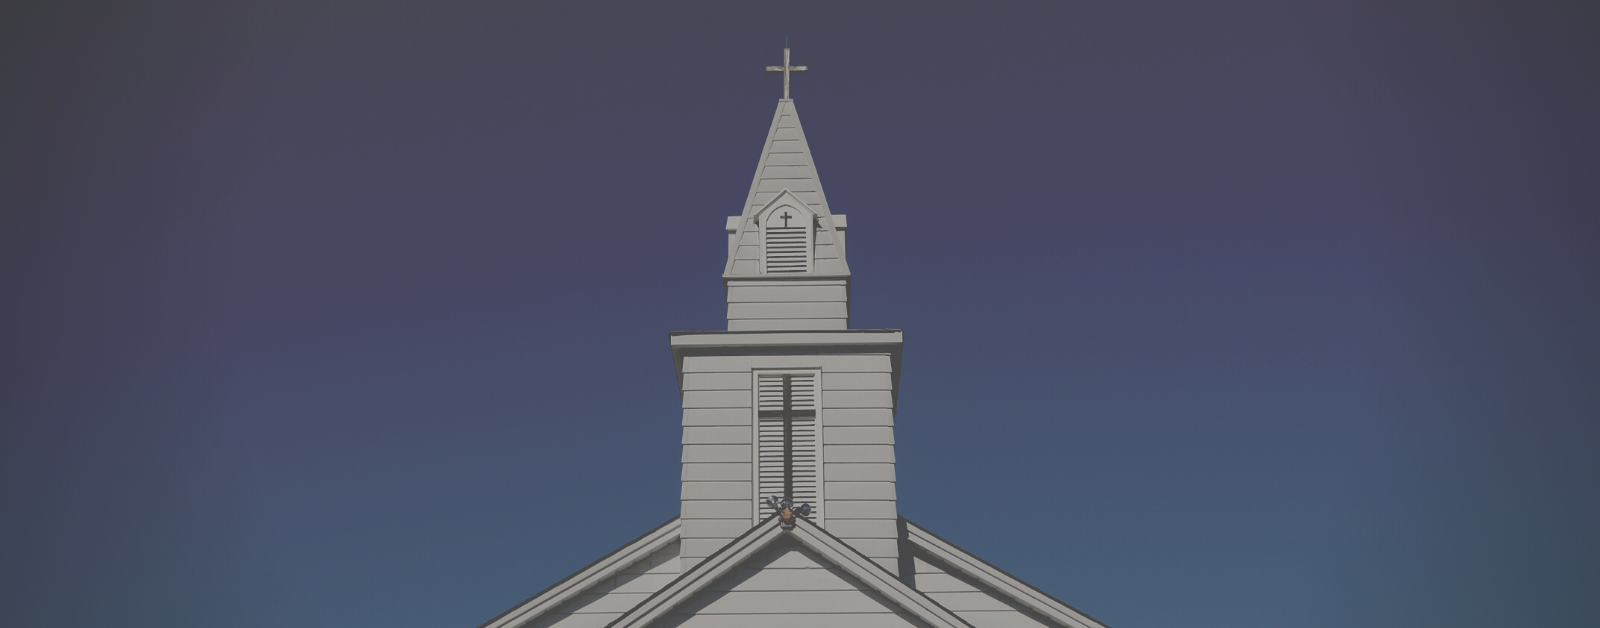 photo of a church steeple against a blue sky